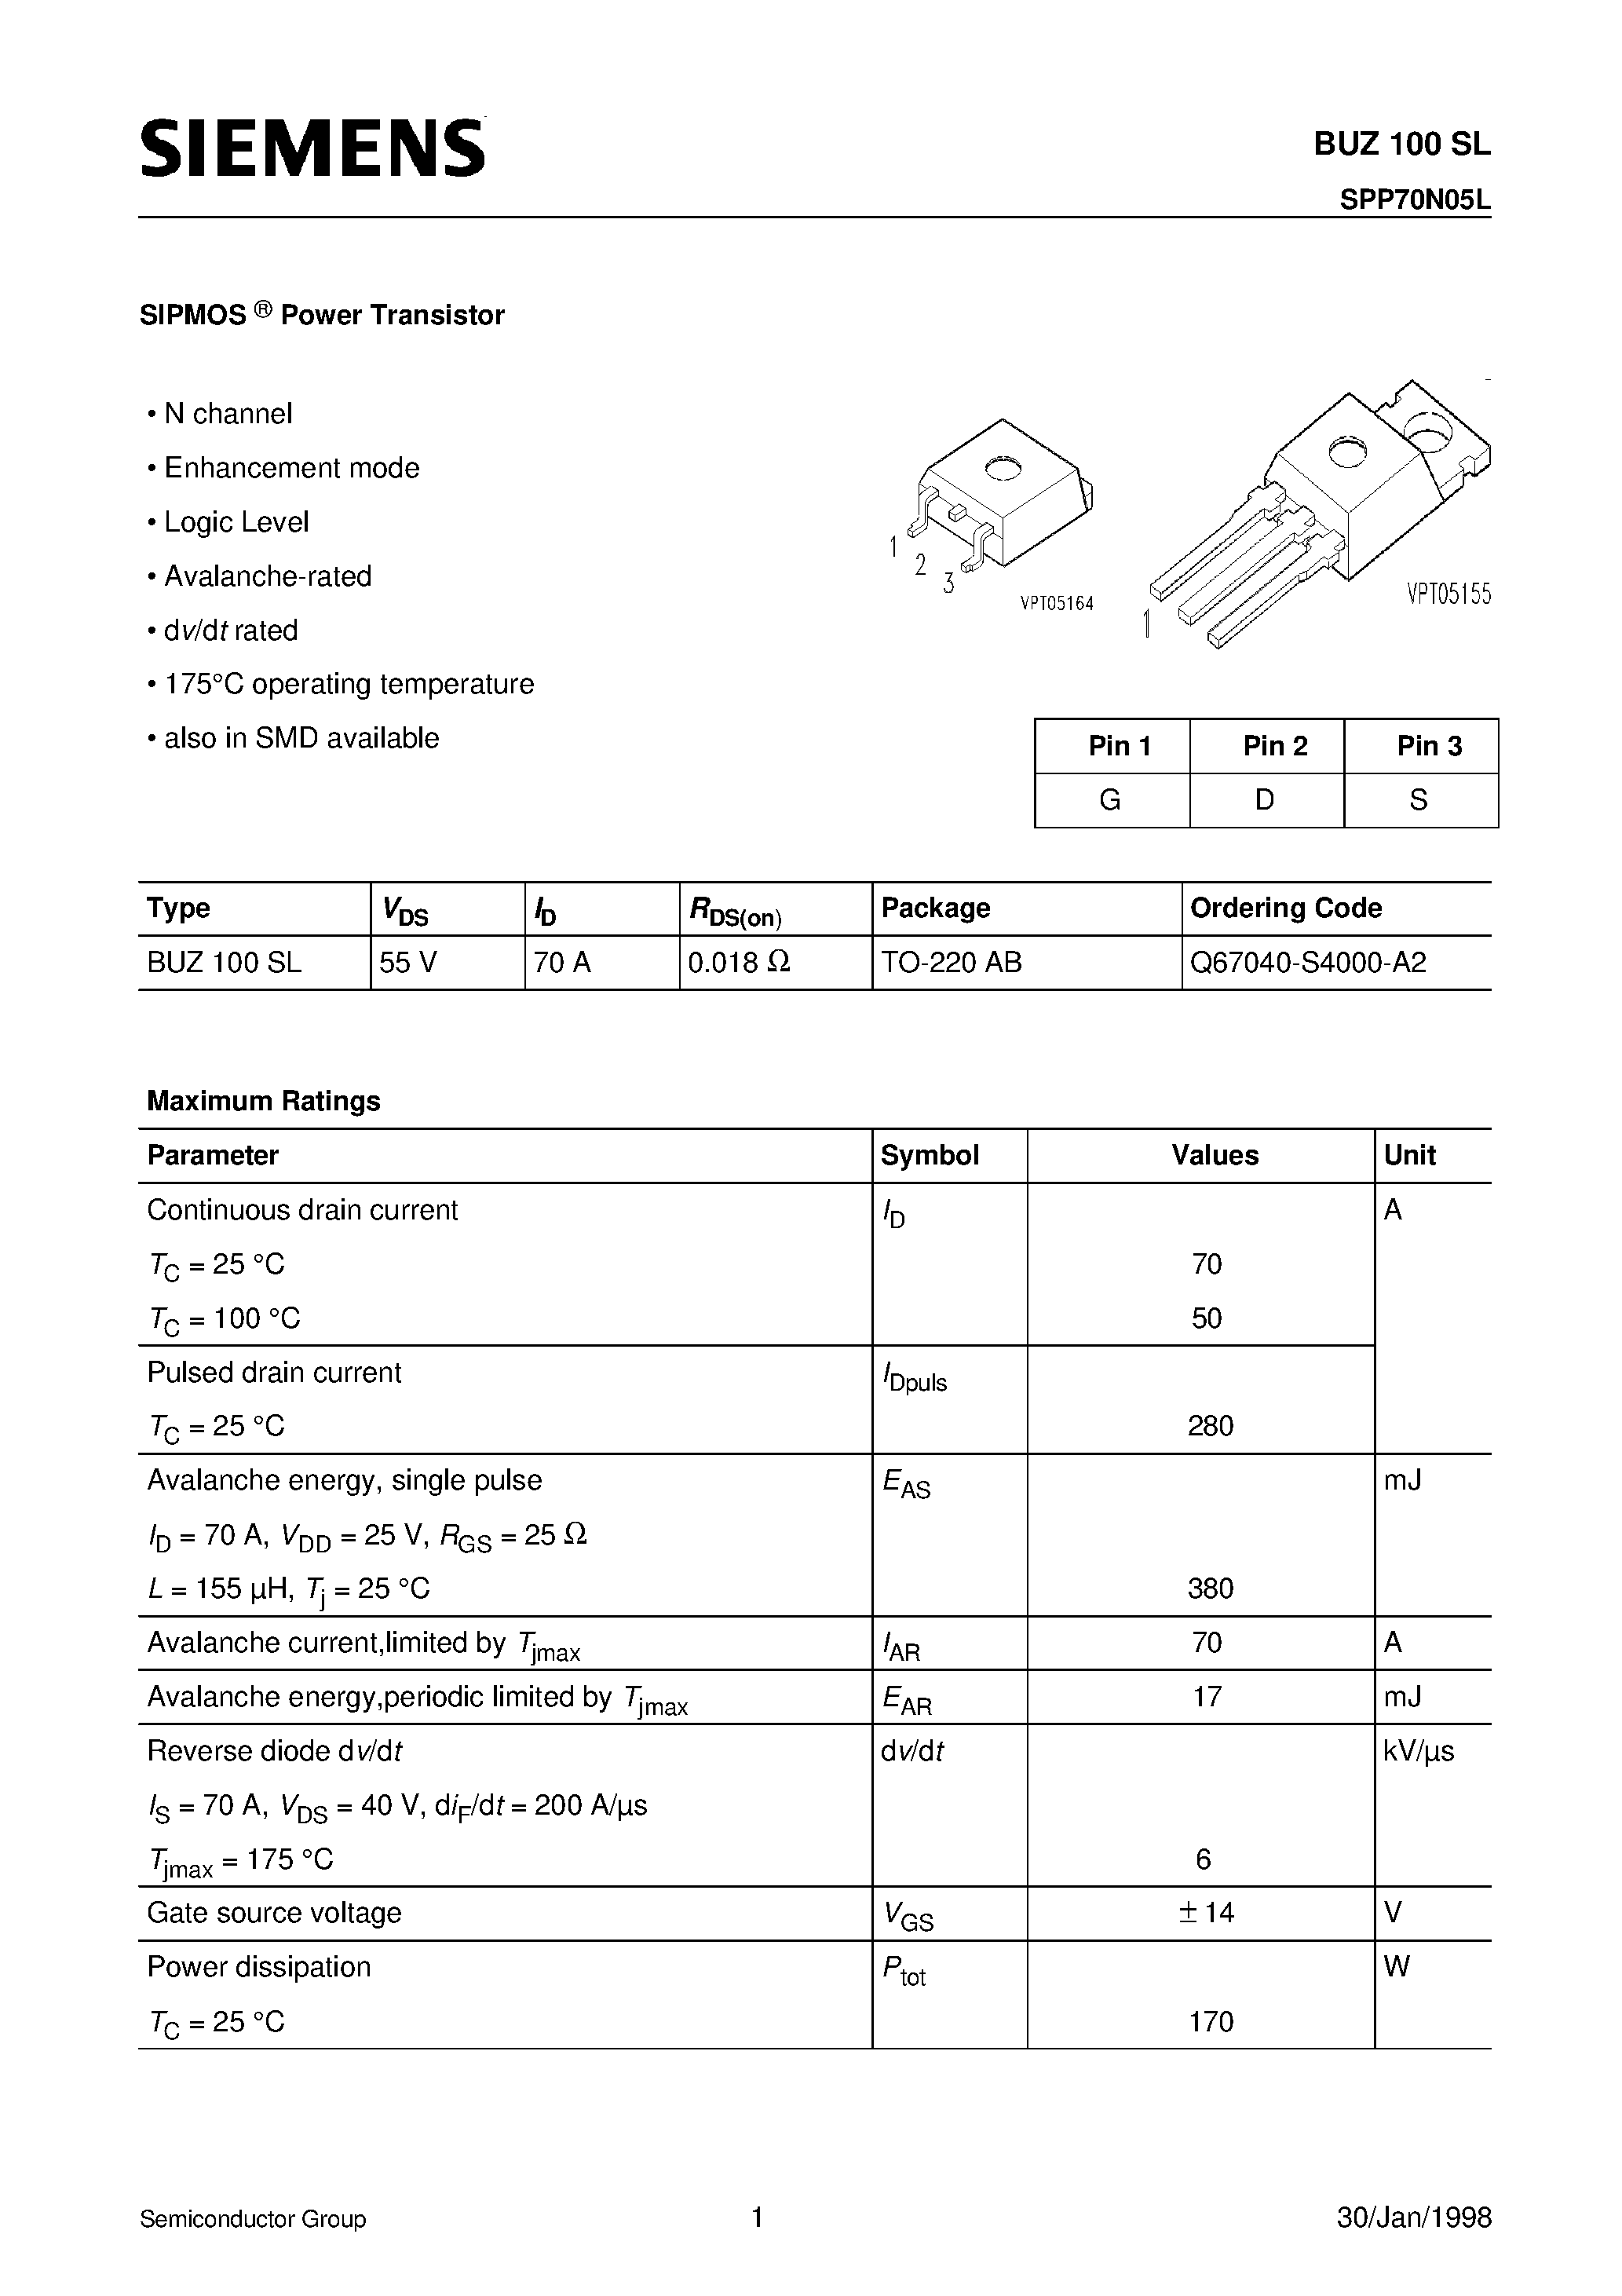 Datasheet BUZ100SL - SIPMOS Power Transistor (N channel Enhancement mode Logic Level Avalanche-rated) page 1